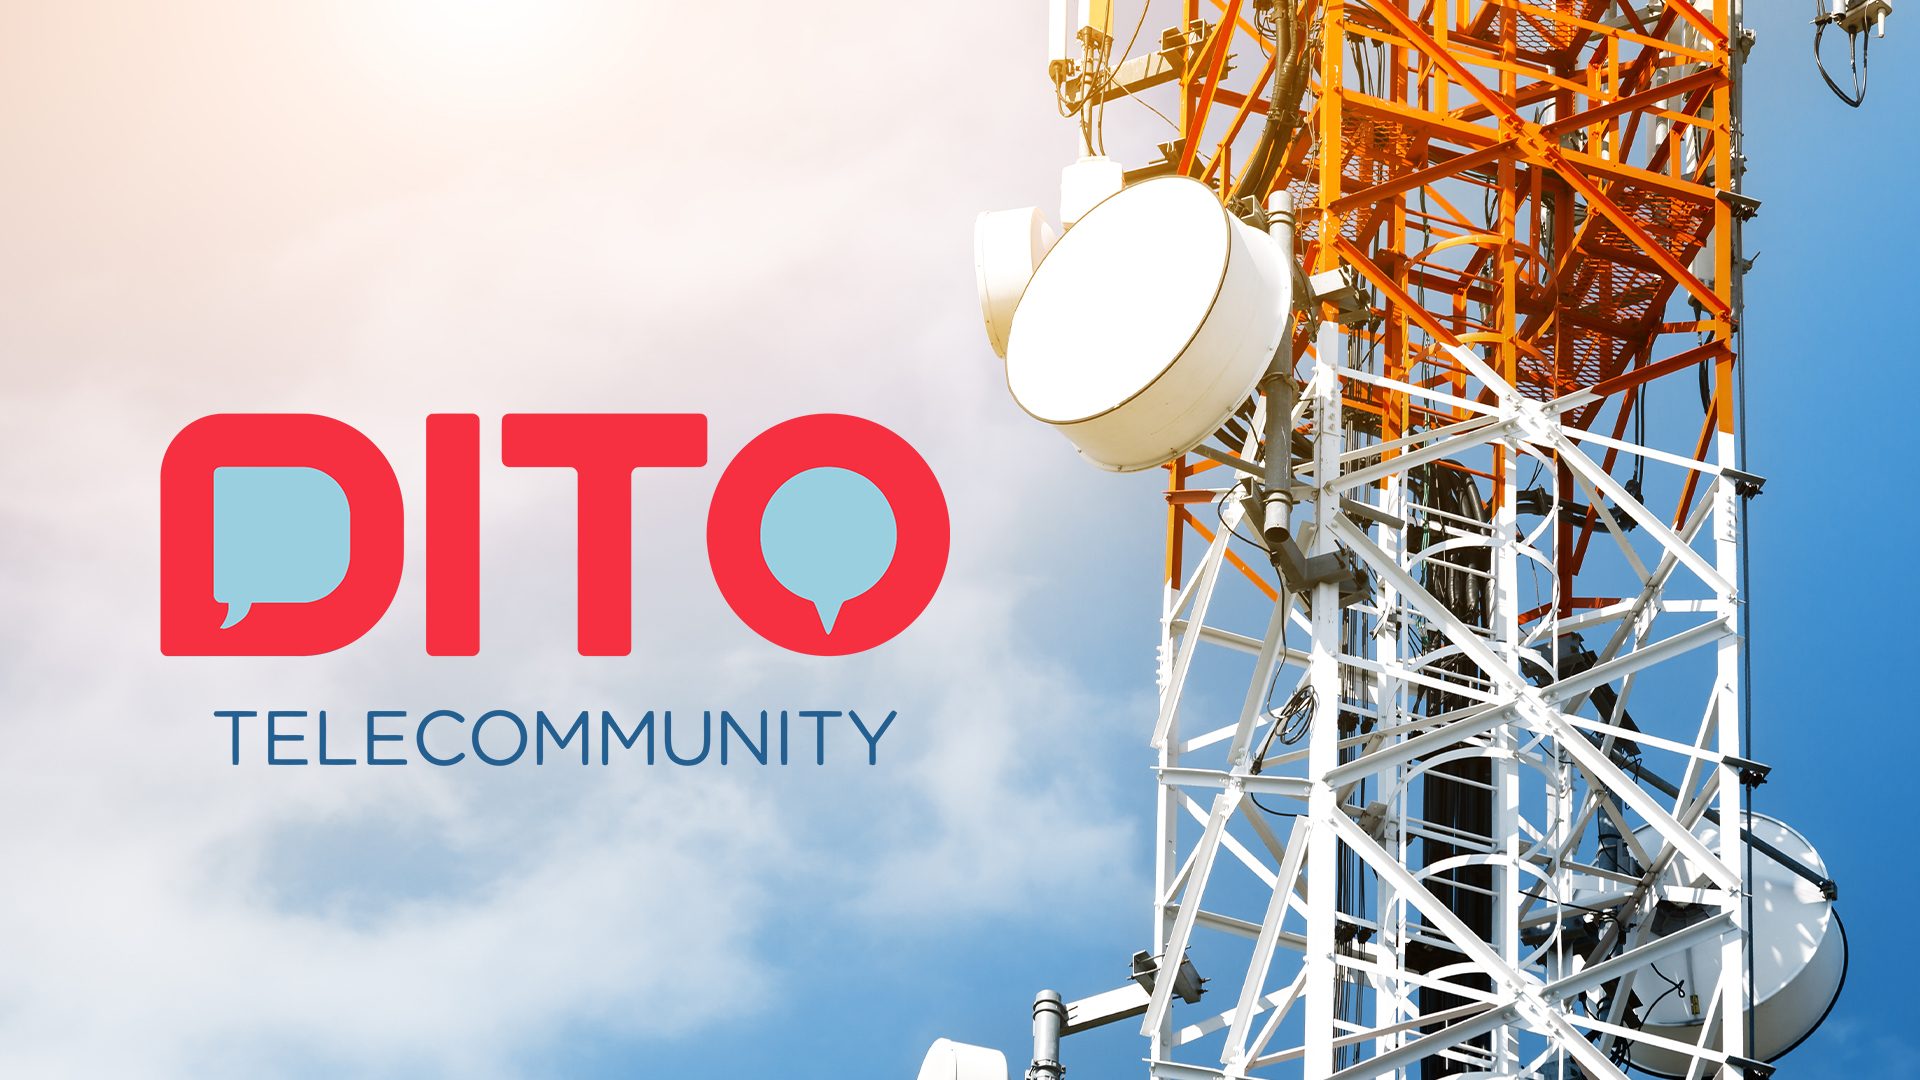 Dito Telecommunity reaches 1 million users